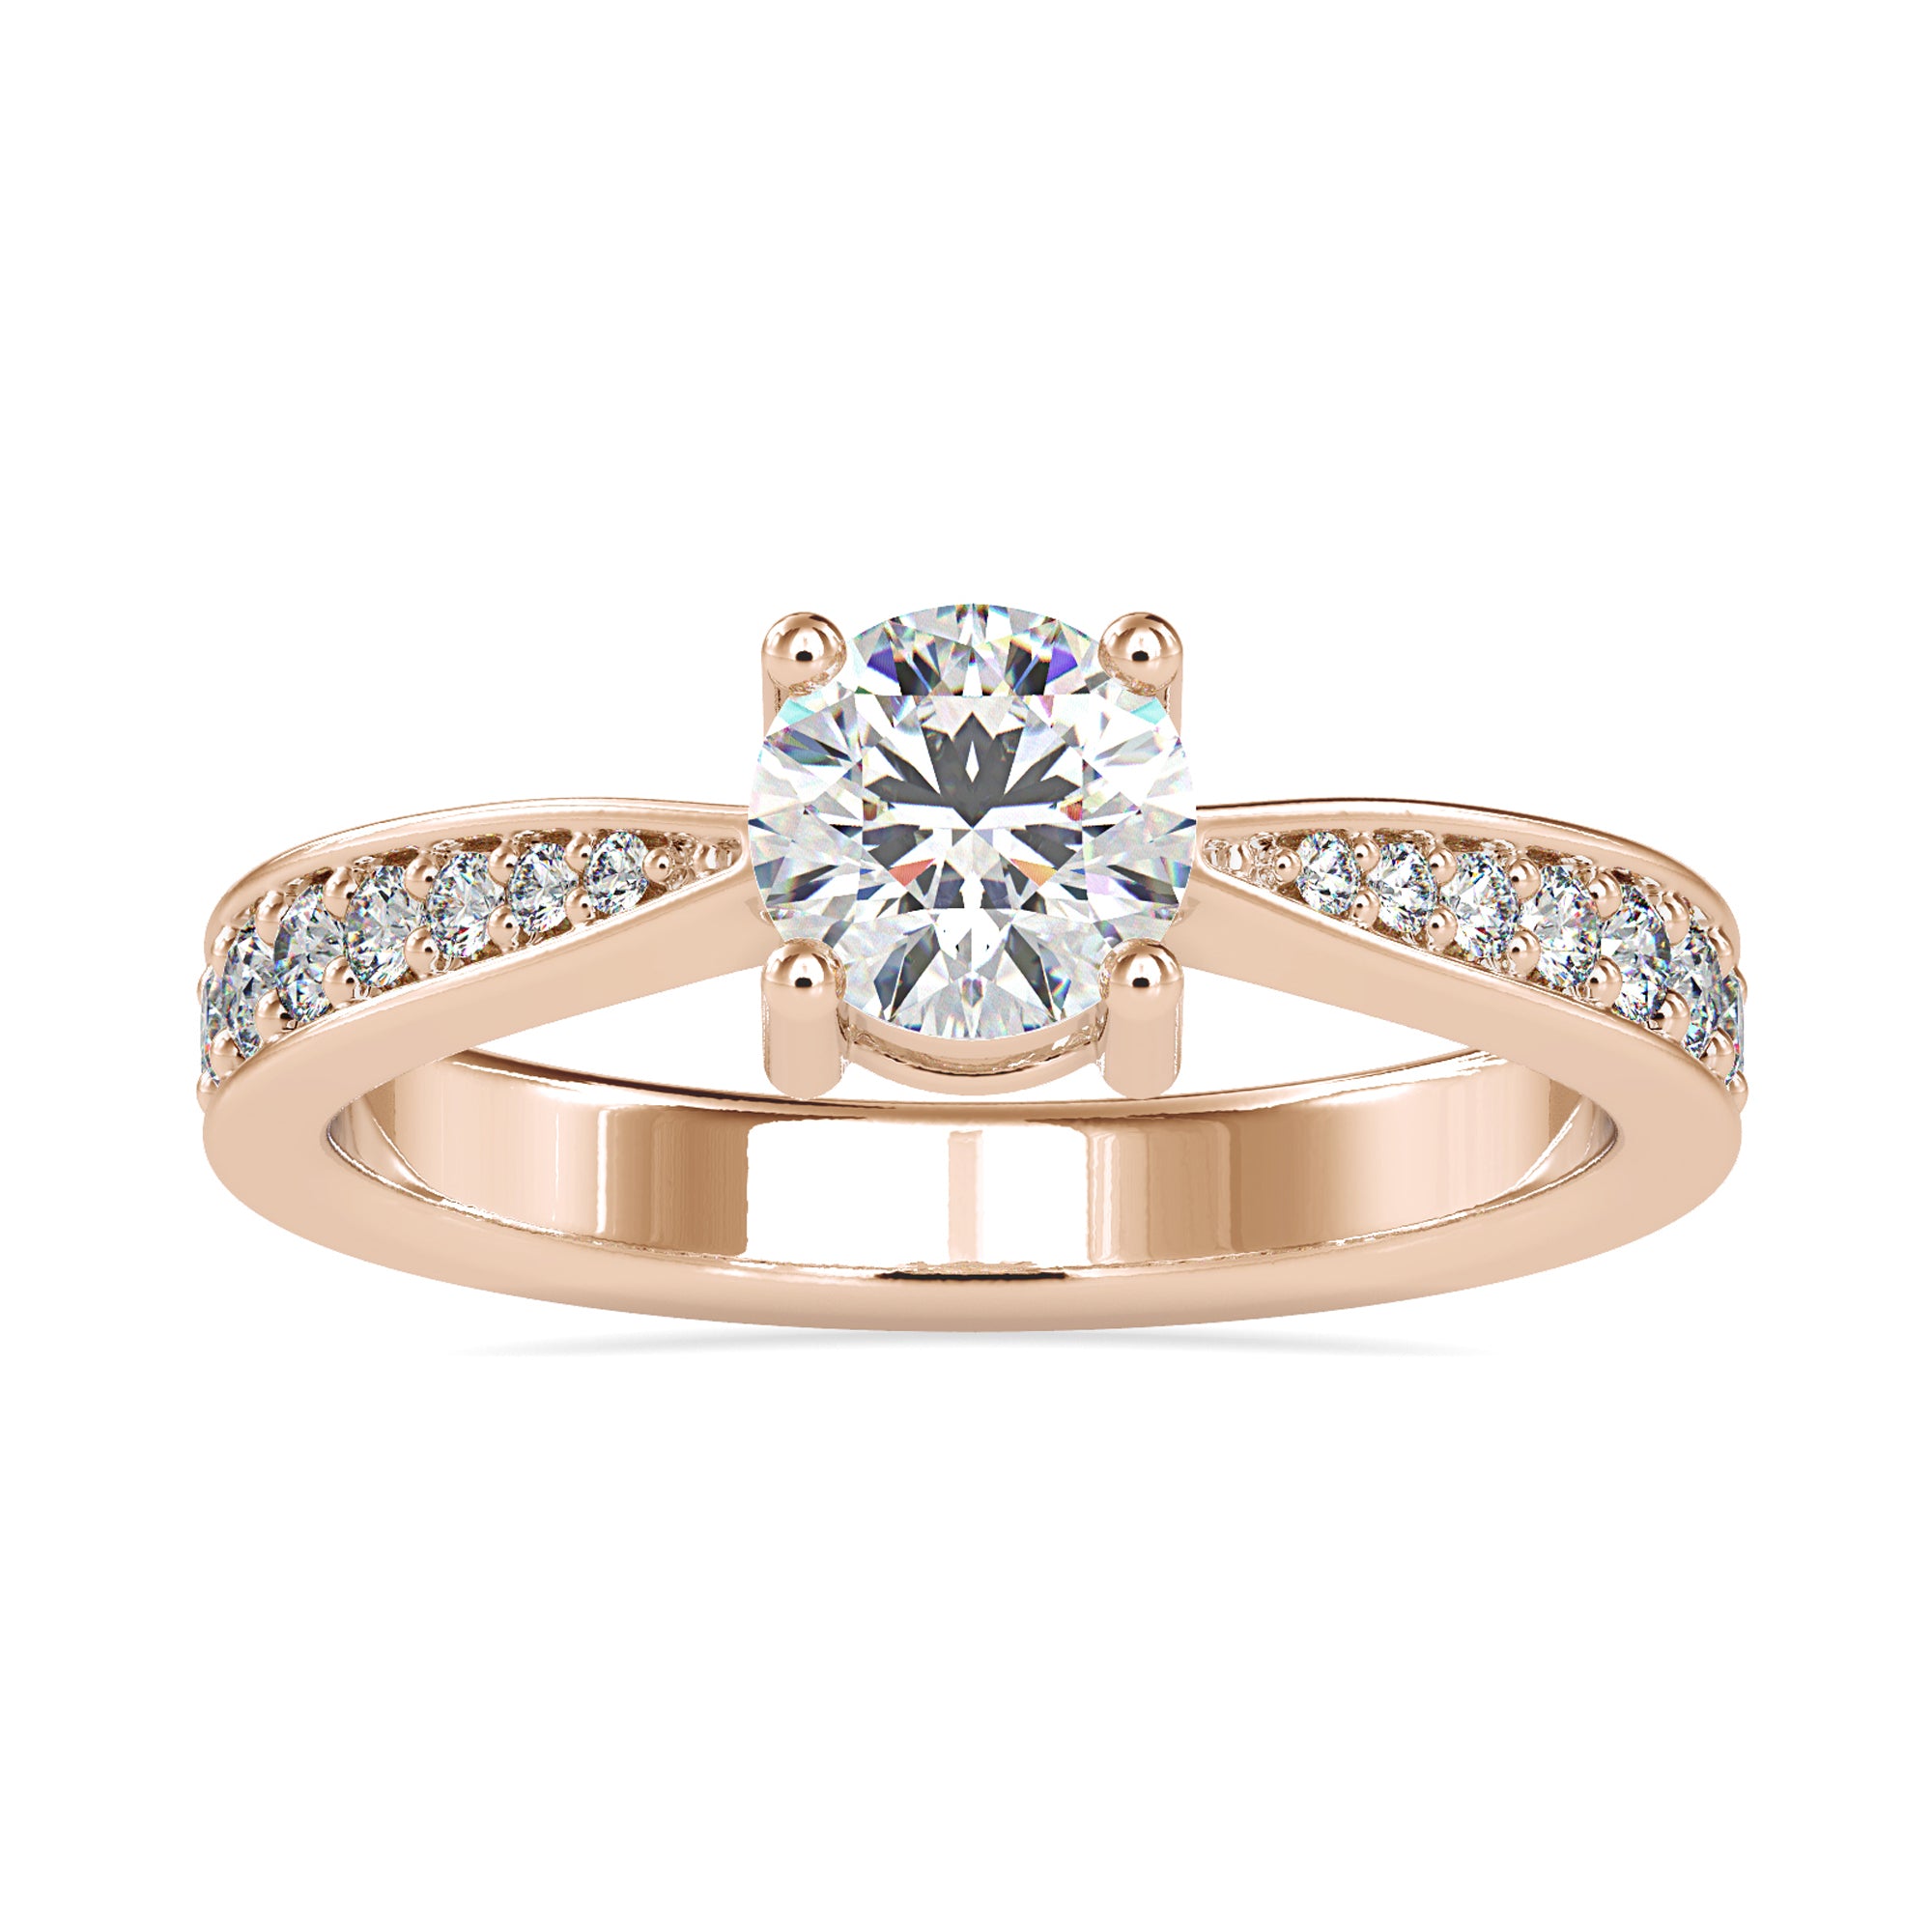 customize engagement ring - diamondrensu